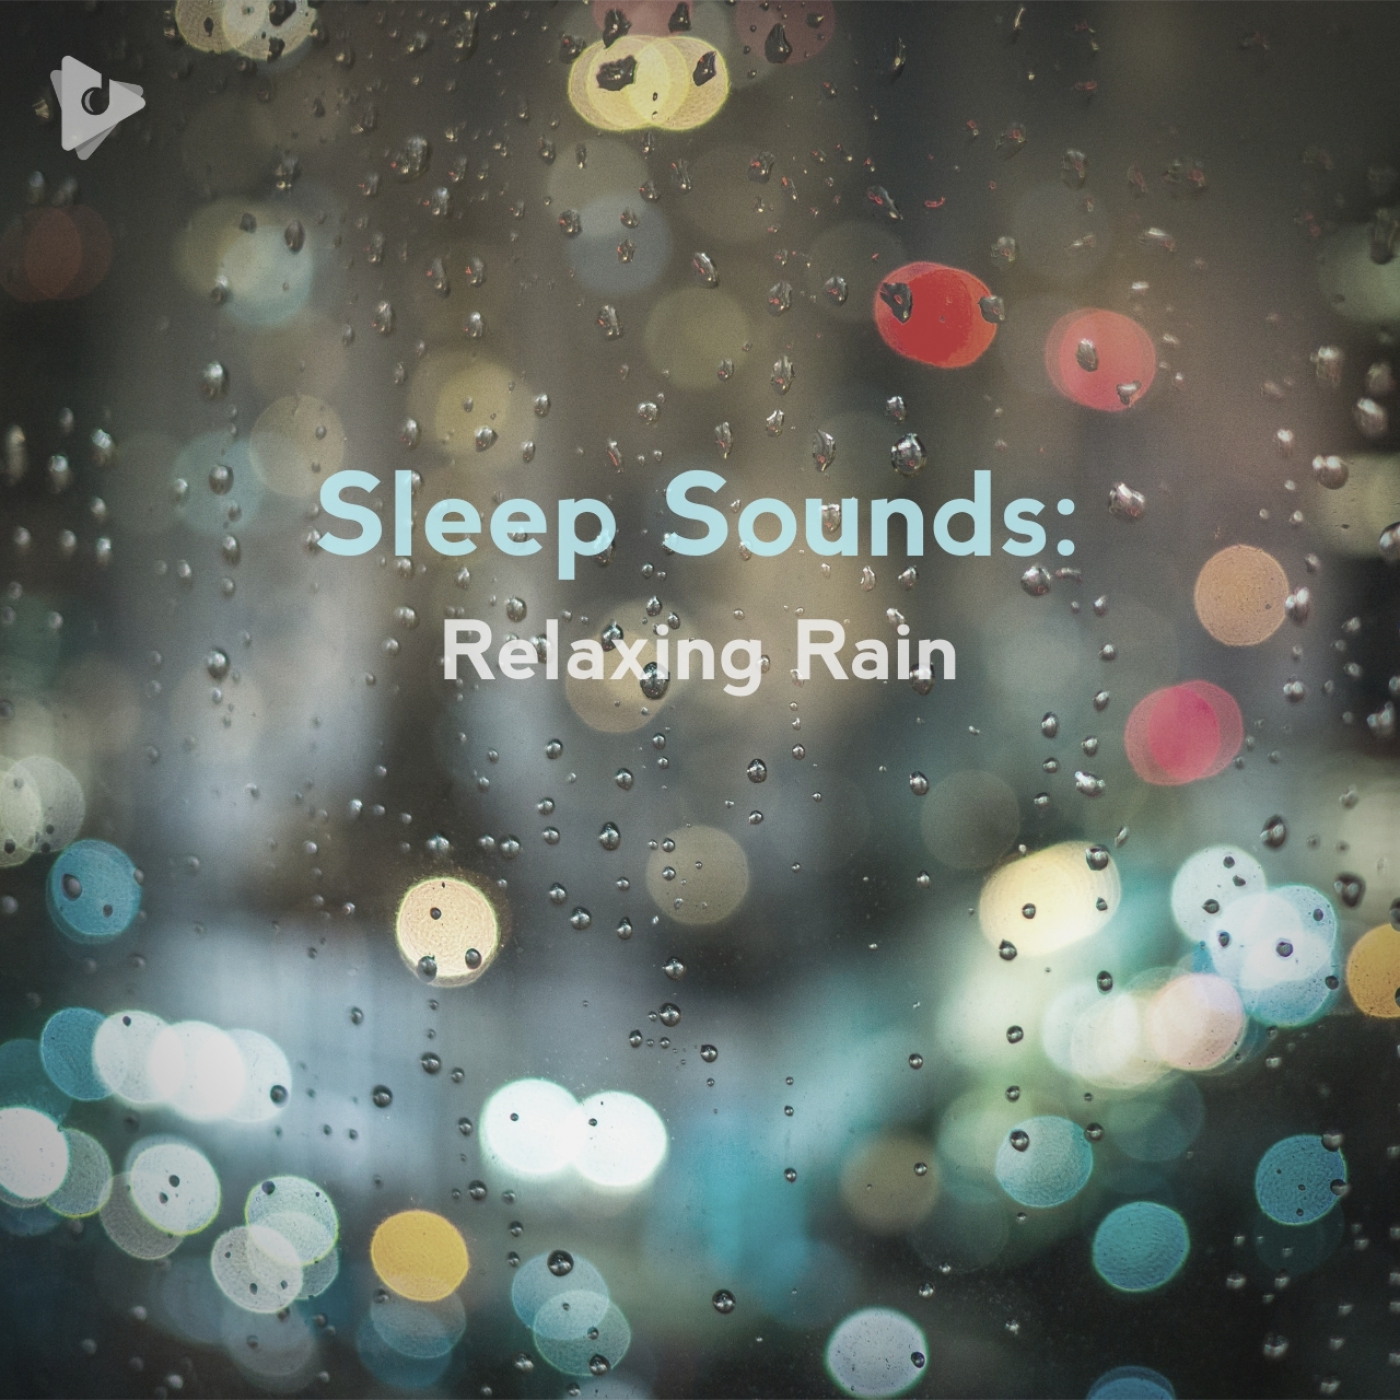 sounds of rain